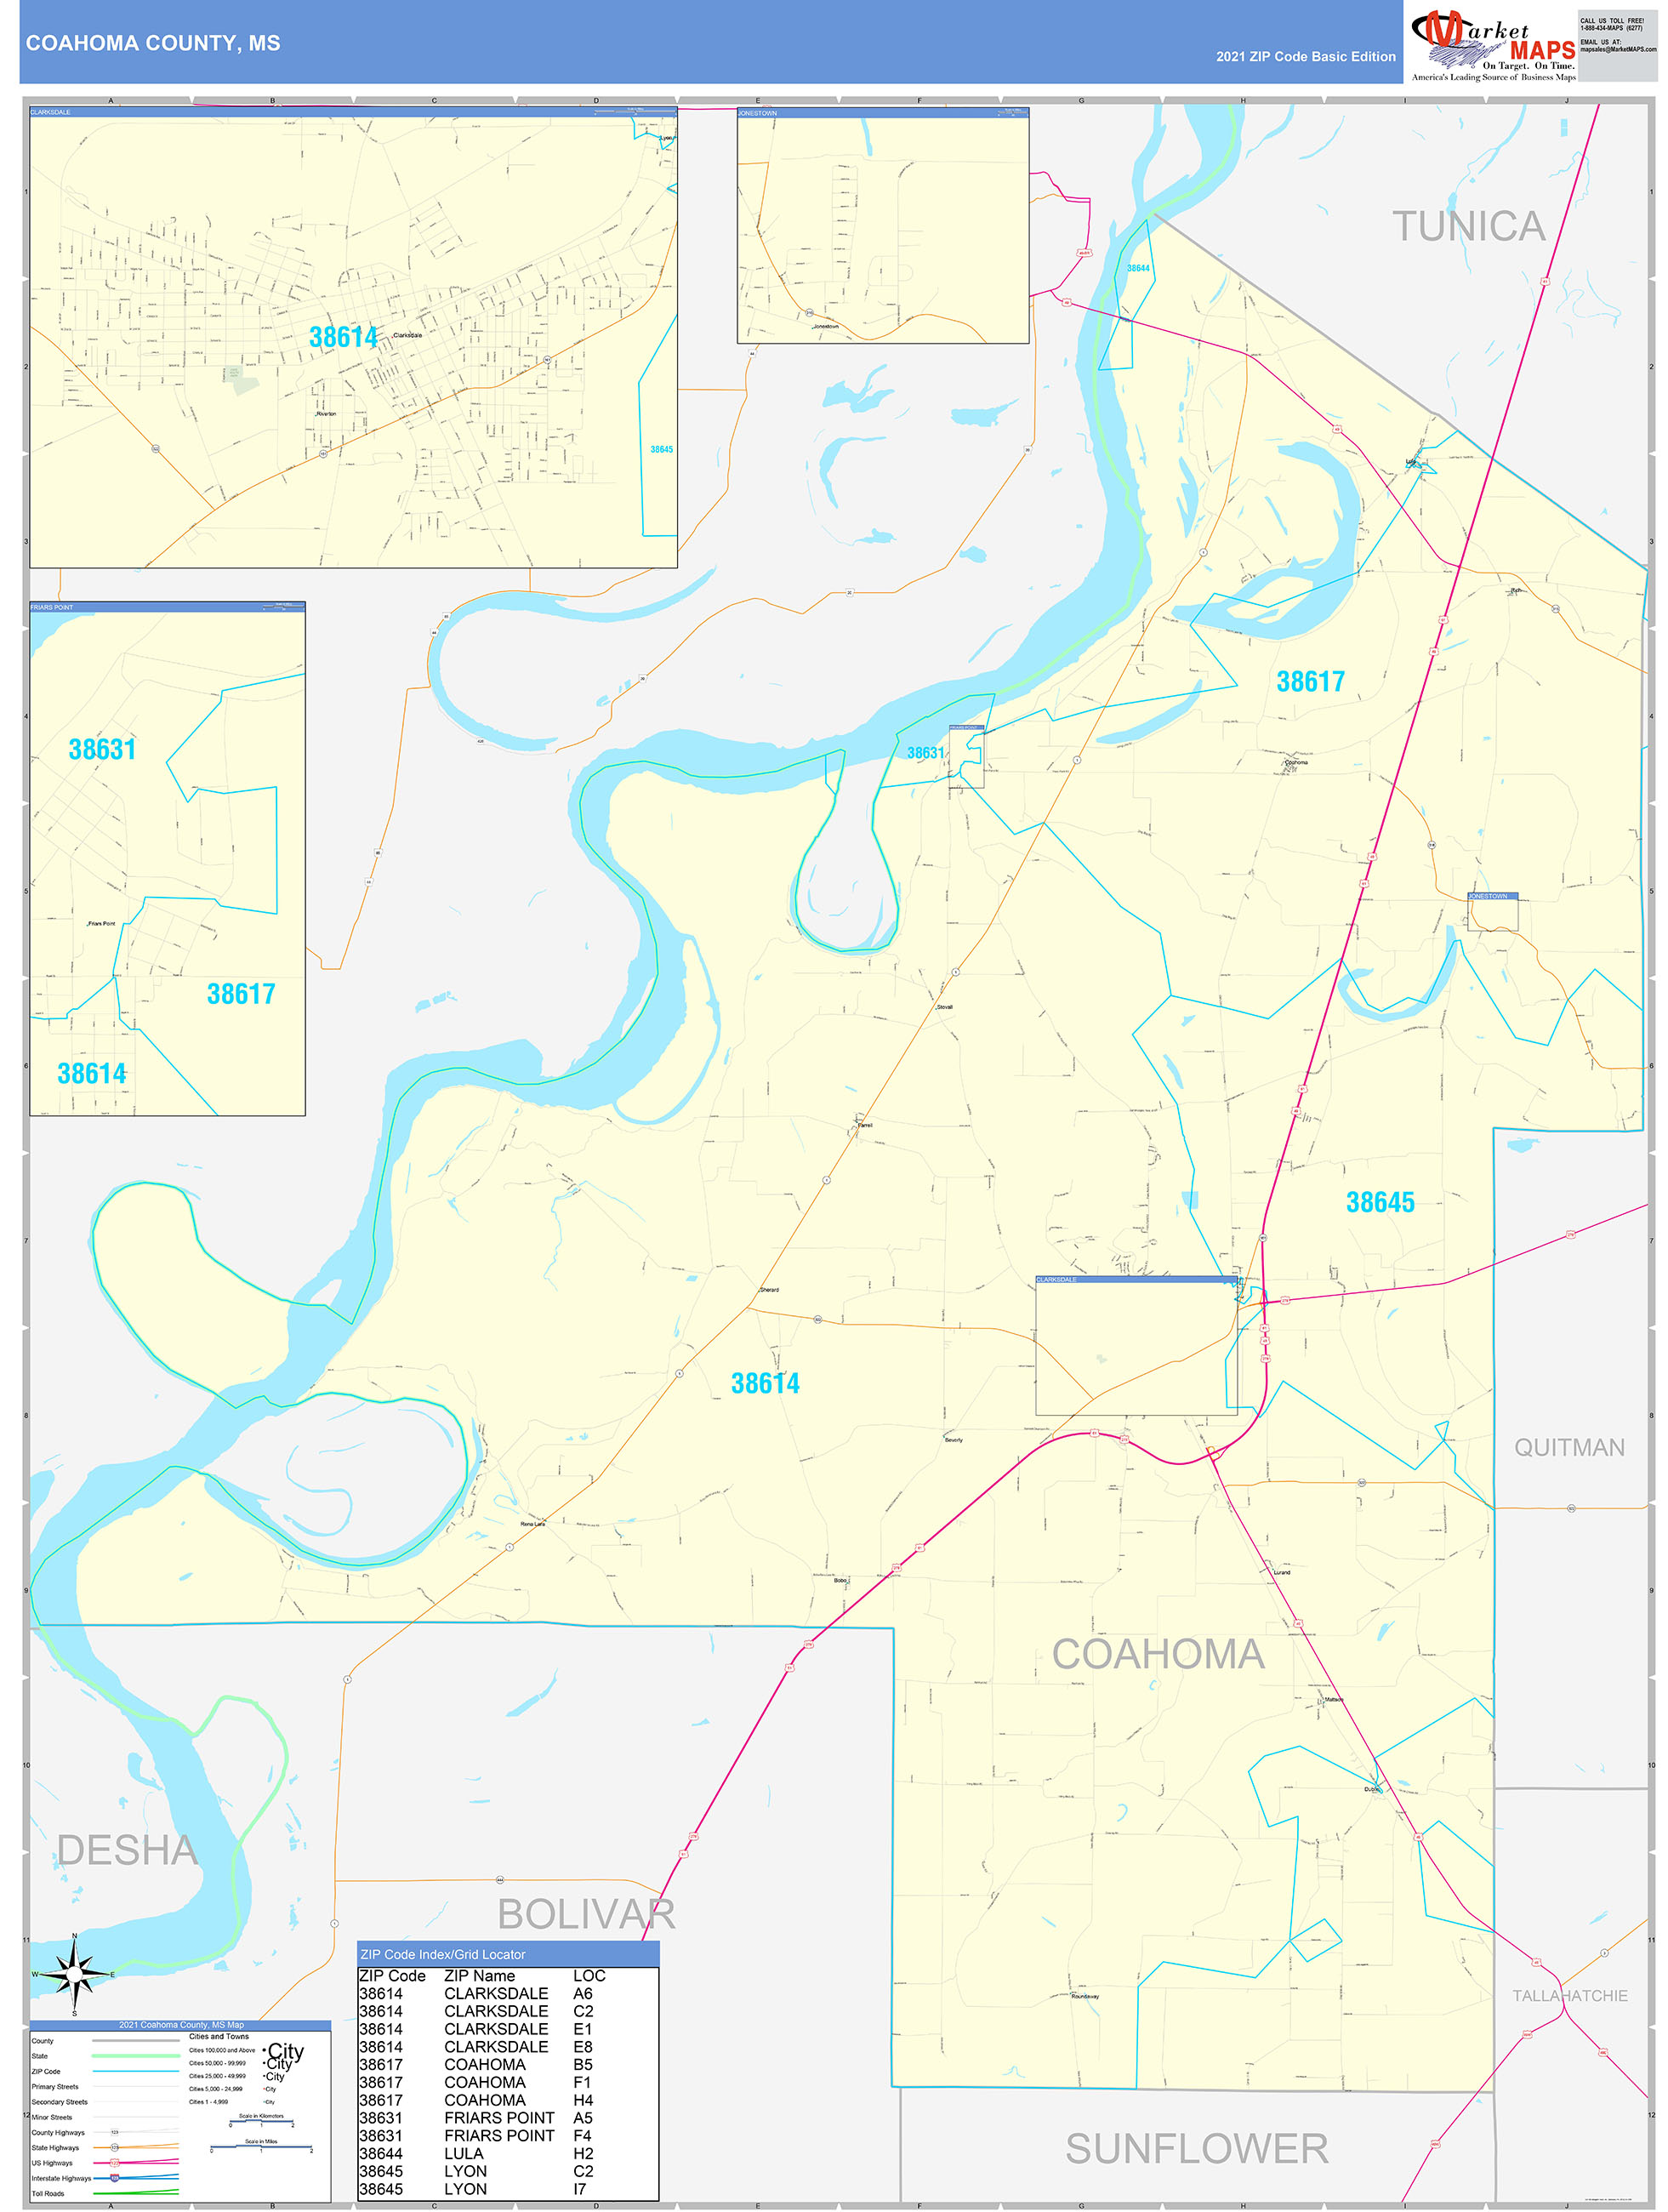 Coahoma County, MS Zip Code Wall Map Basic Style by MarketMAPS MapSales